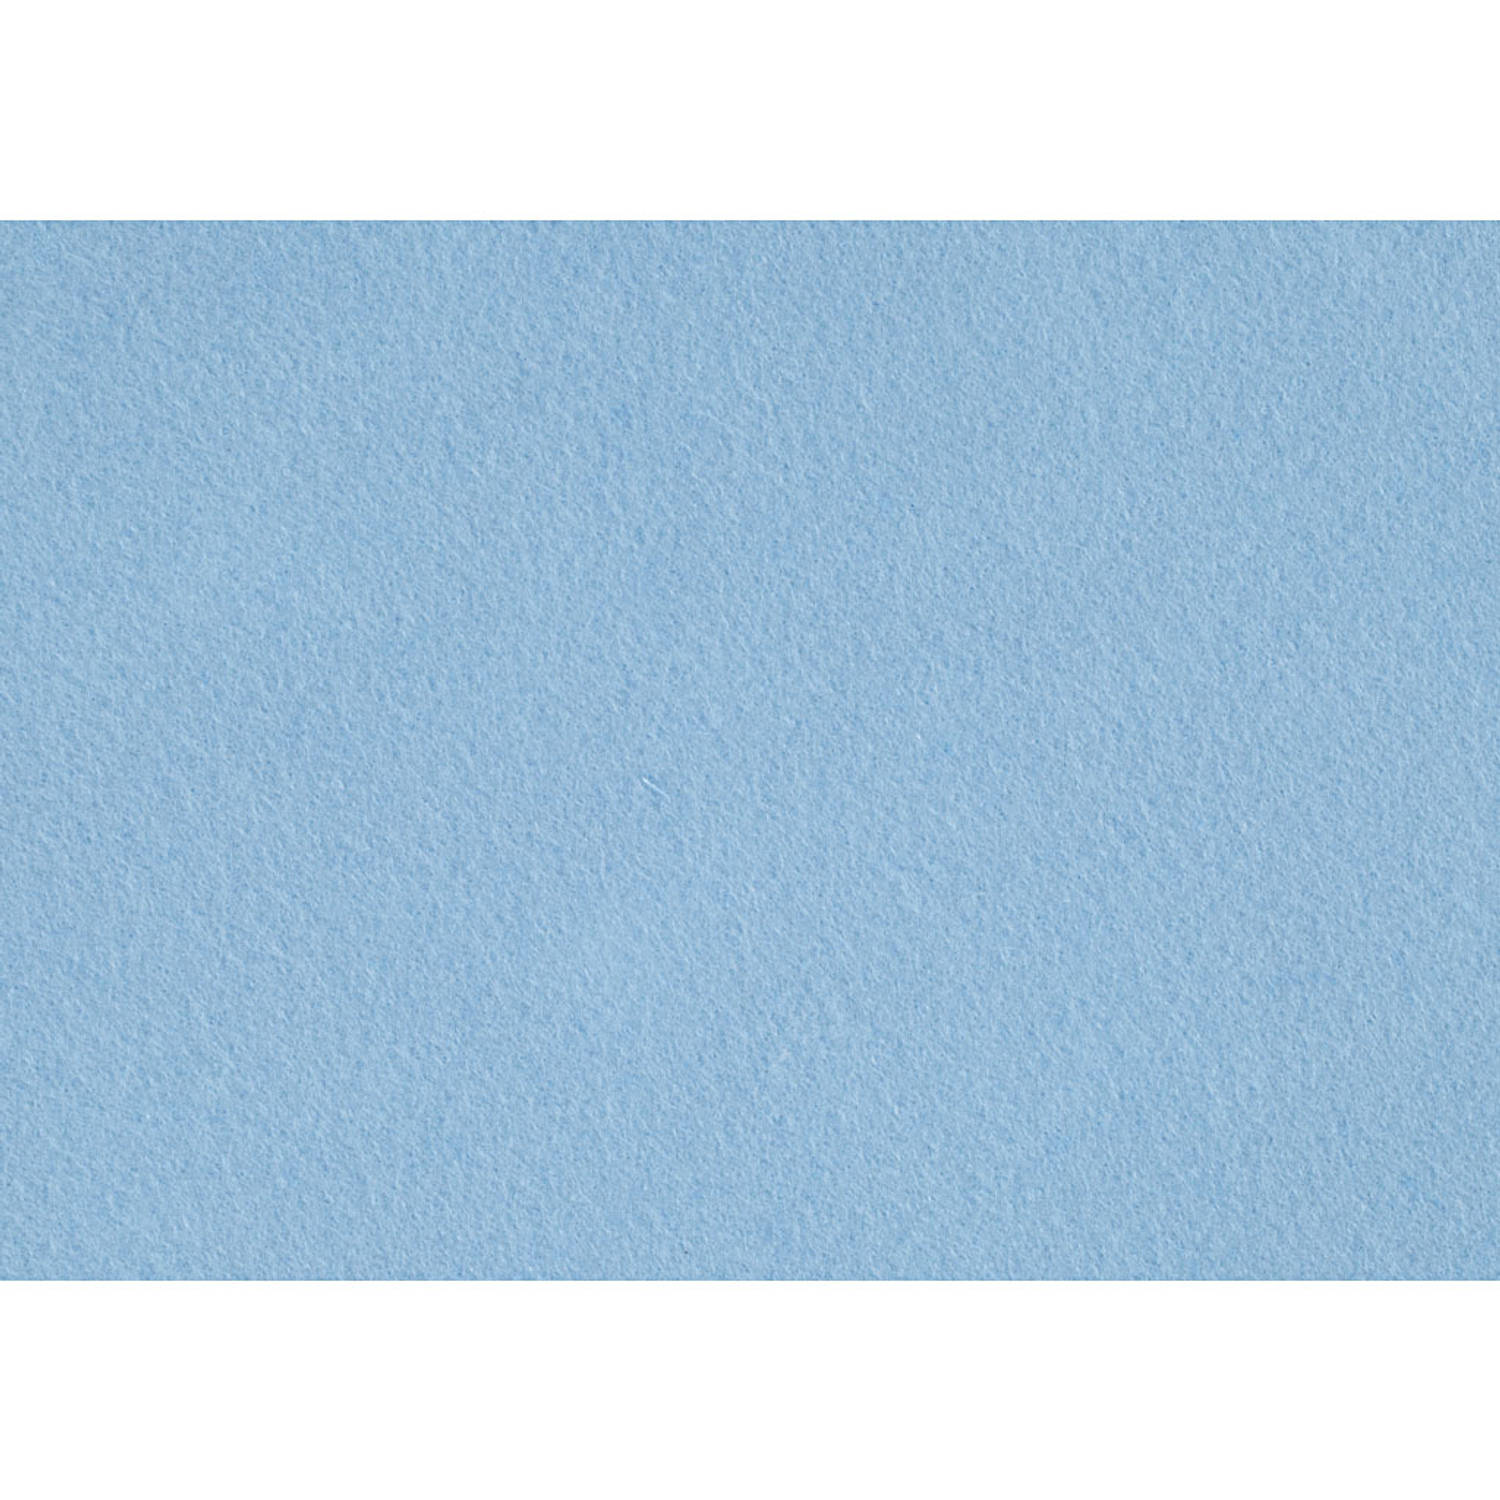 Creotime hobbyvilt A4 21 x 30 cm vilt lichtblauw 10 stuks